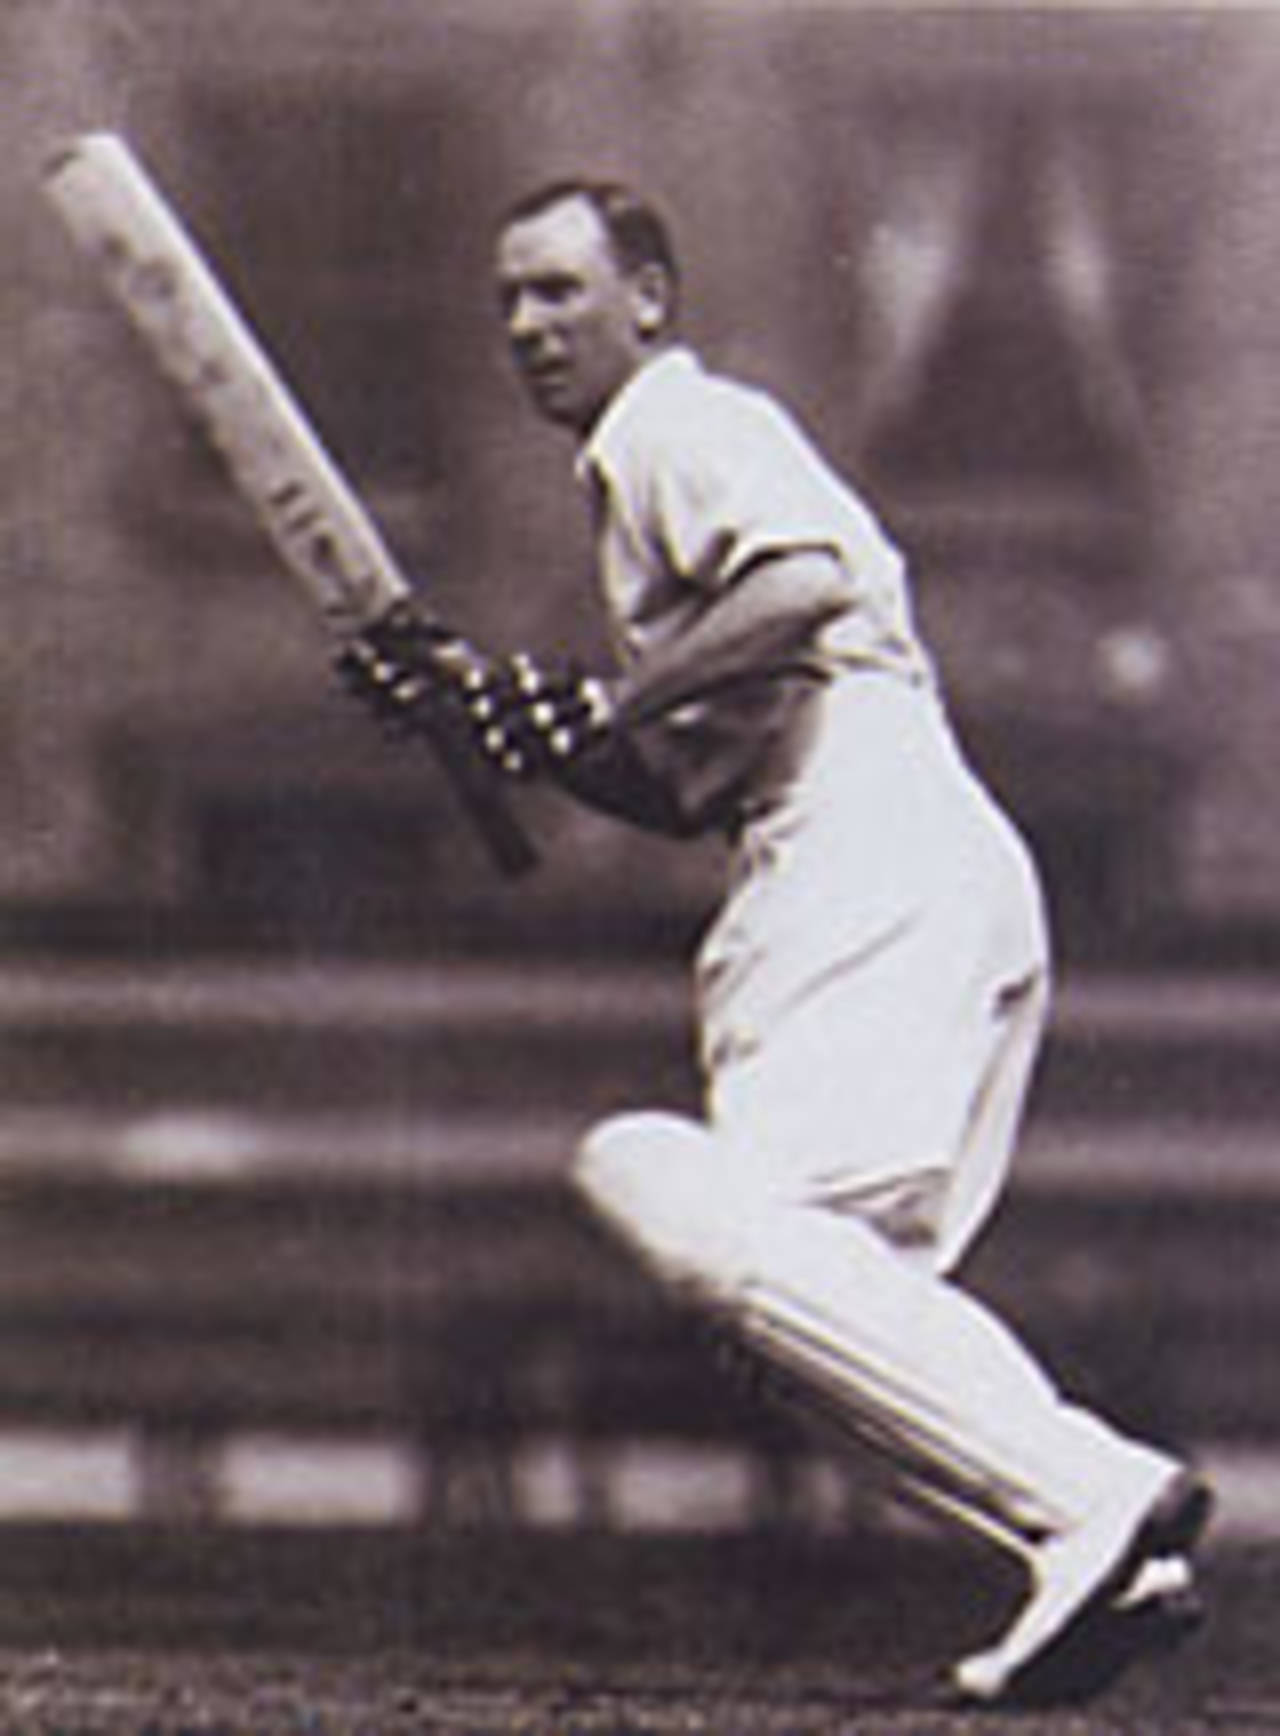 Among batsmen with at least 5000 Test runs, Jack Hobbs has the best consistency index&nbsp;&nbsp;&bull;&nbsp;&nbsp;The Cricketer International